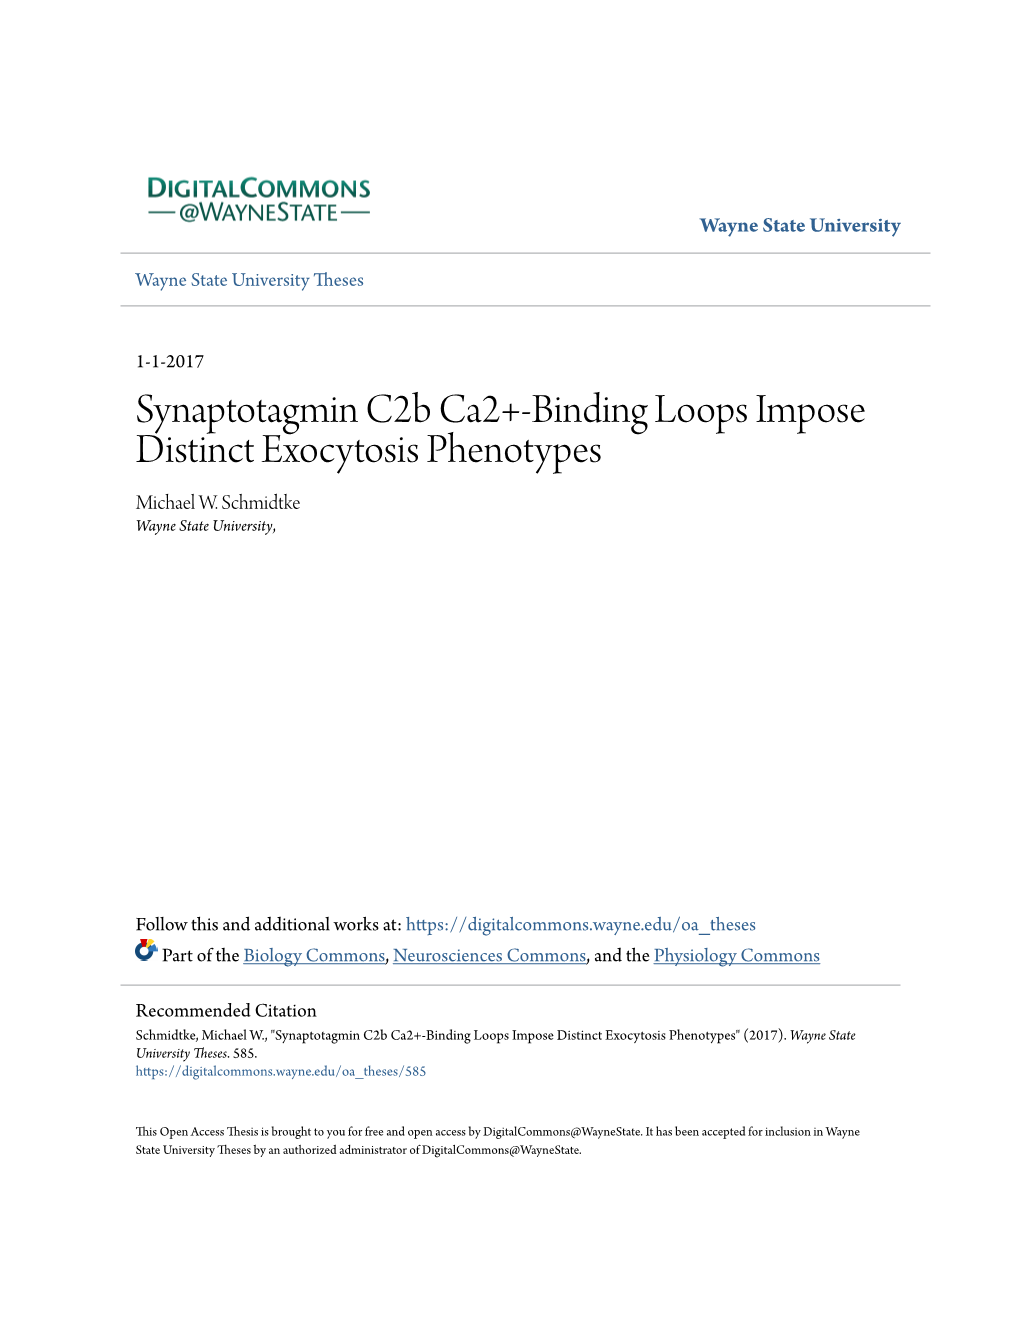 Synaptotagmin C2b Ca2+-Binding Loops Impose Distinct Exocytosis Phenotypes Michael W